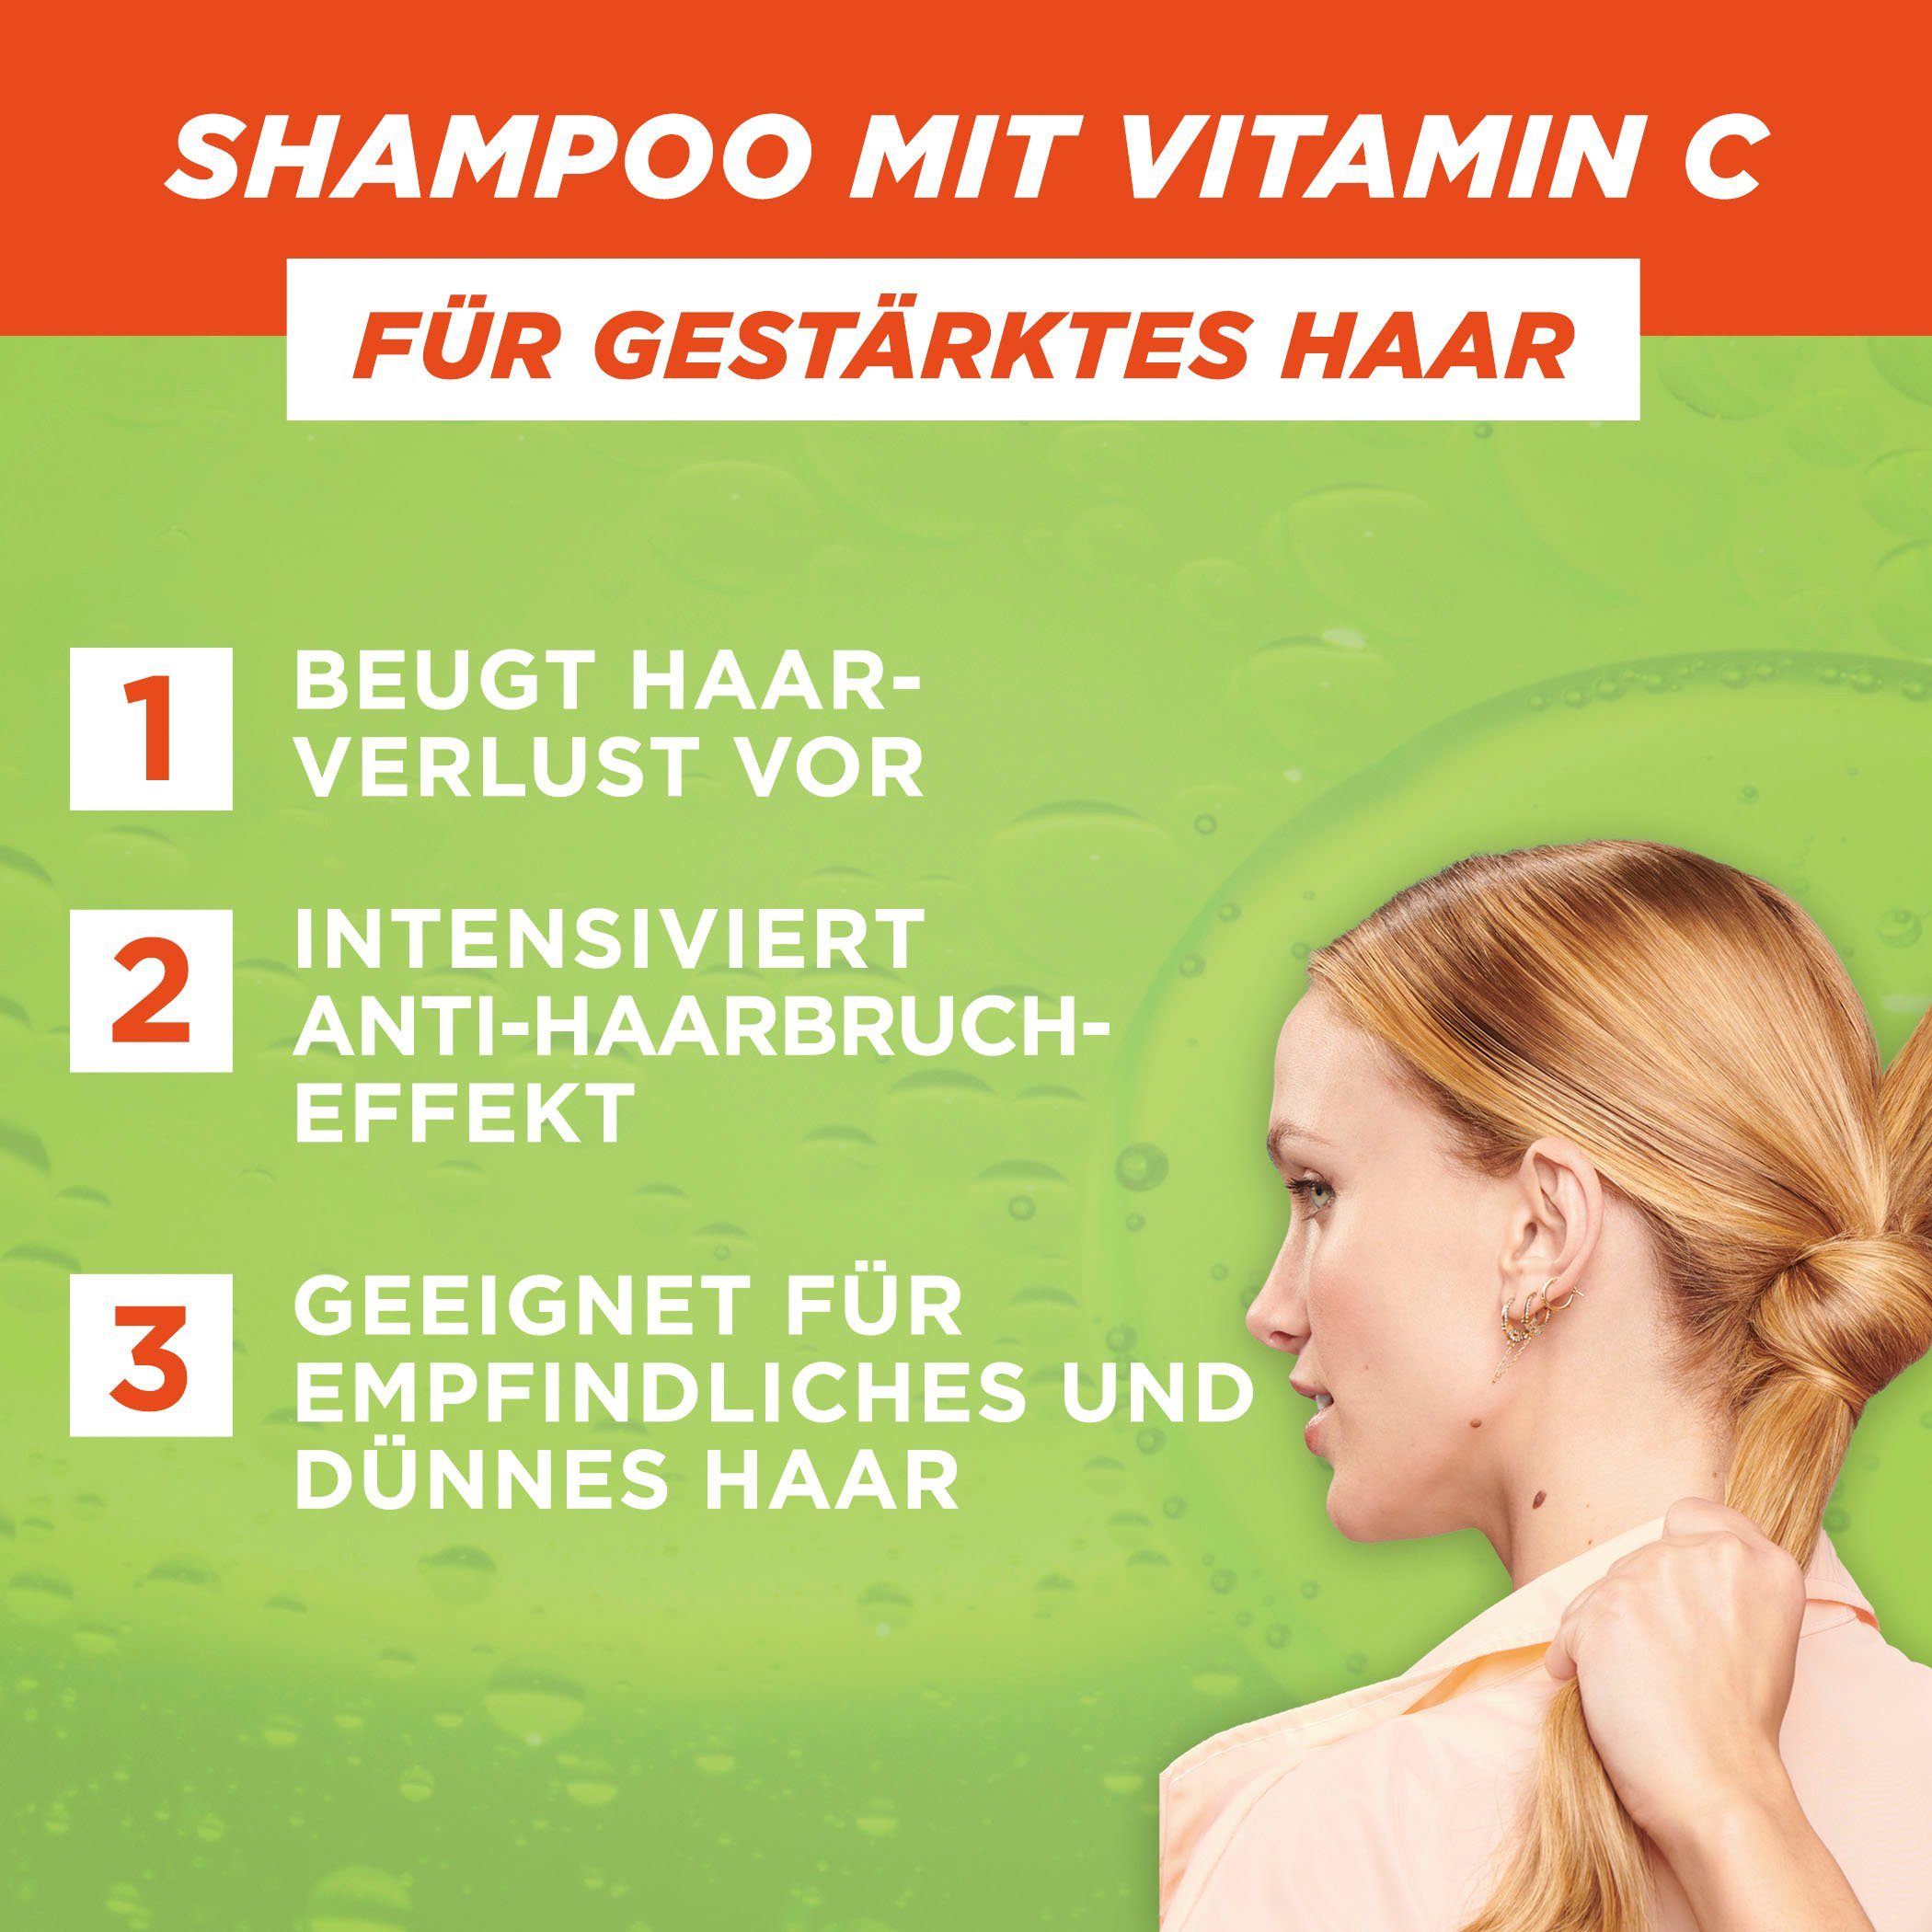 Garnier Set, Haarshampoo Kraft GARNIER Fructis Vitamine & 6-tlg. Shampoo,